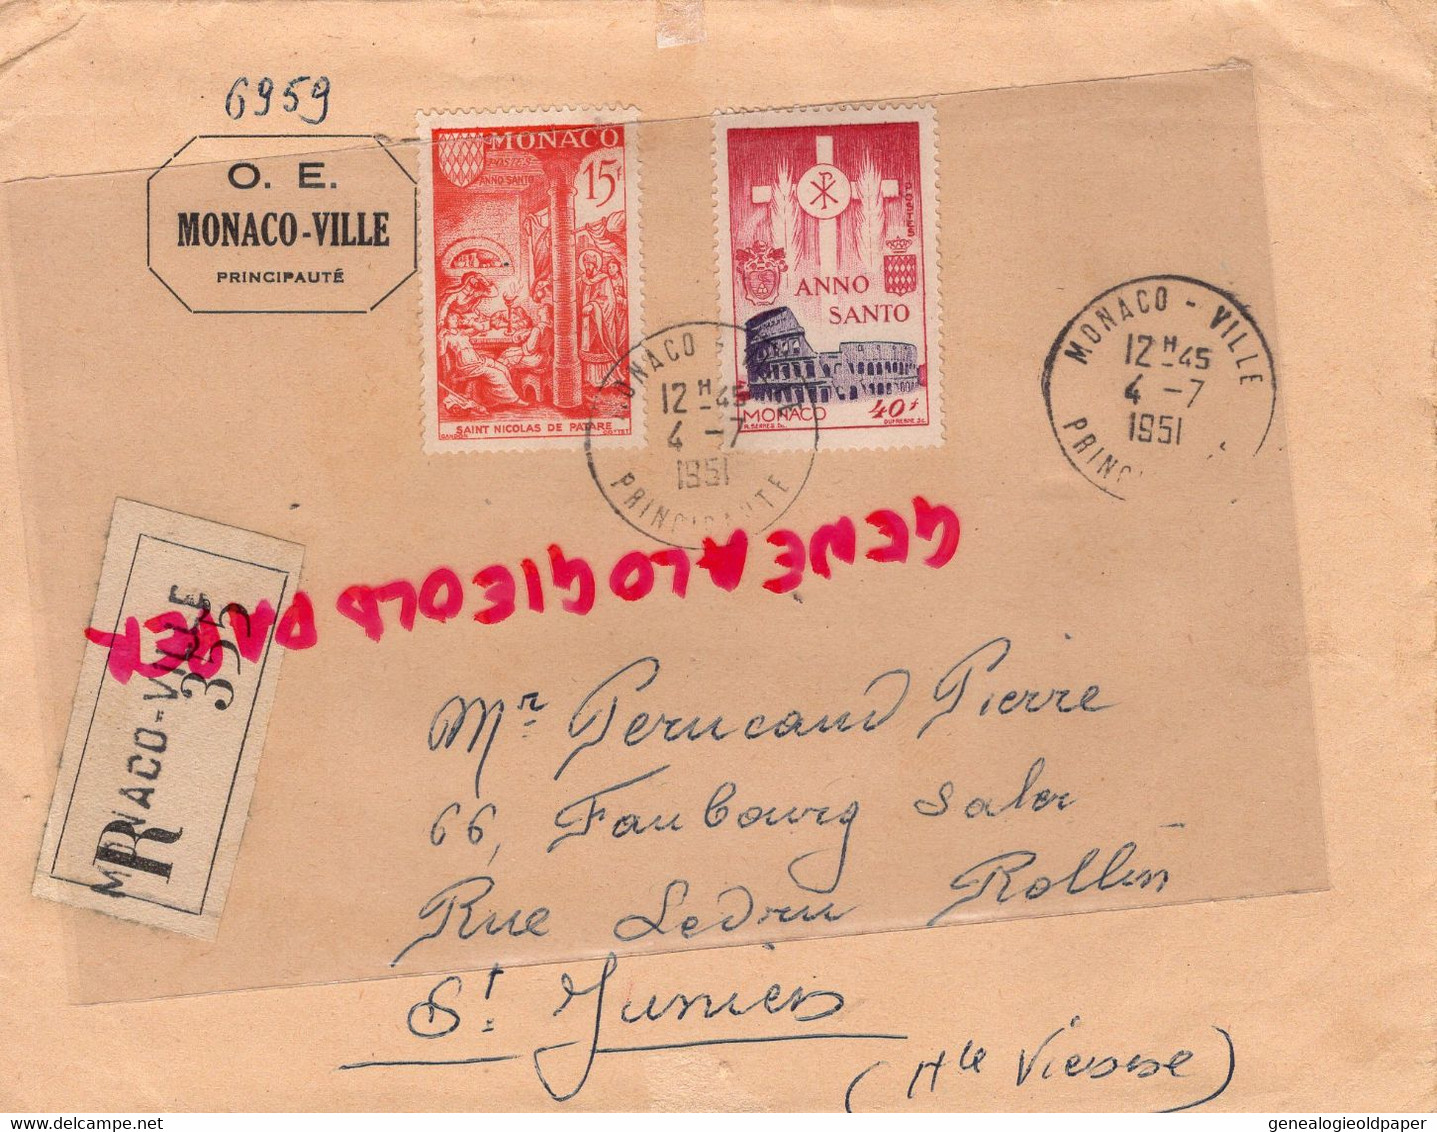 MONACO- MARCOPHILIE TIMBRES 15 F- ANNO SANTO 40 F-  RECOMMANDE -1951-  PERUCAUD MEGISSERIE SAINT JUNIEN - Postmarks